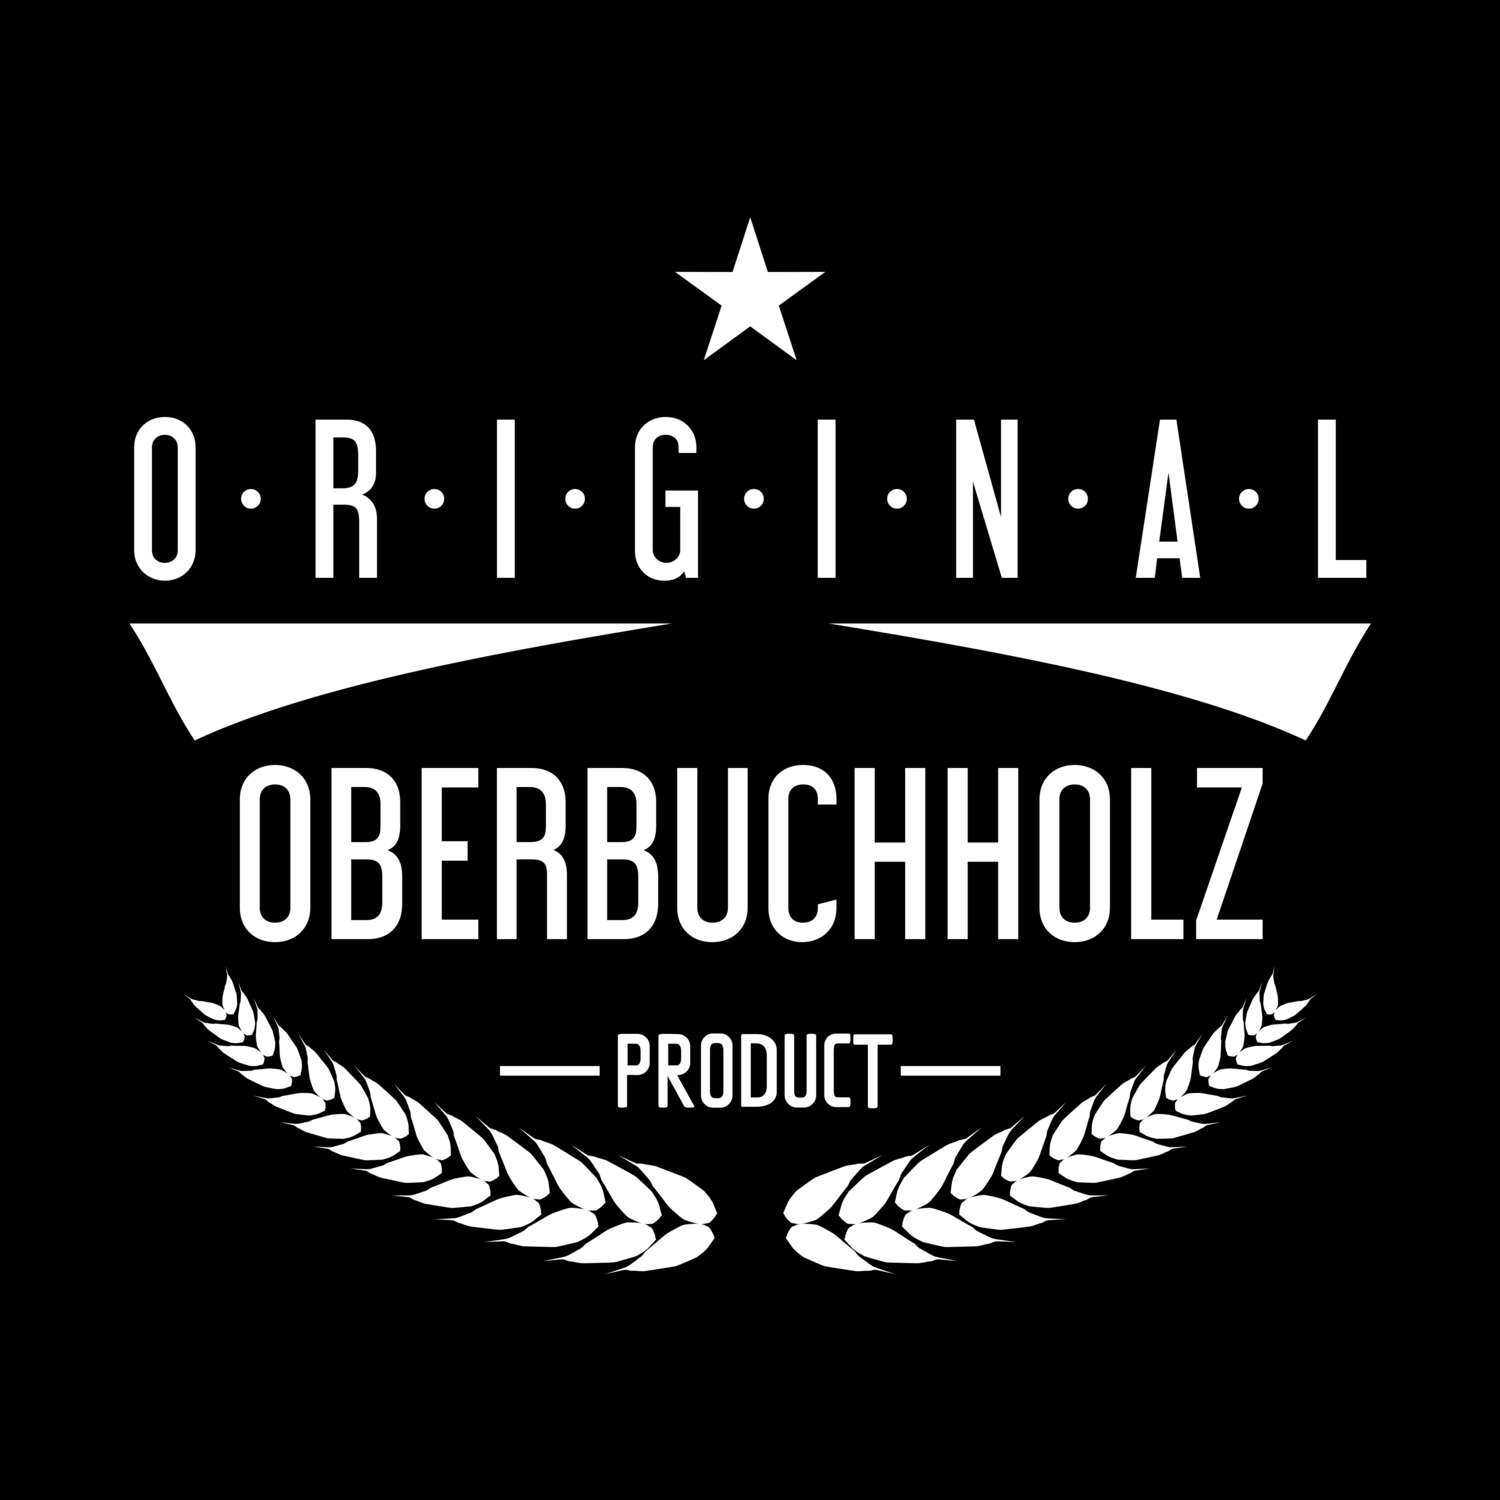 Oberbuchholz T-Shirt »Original Product«